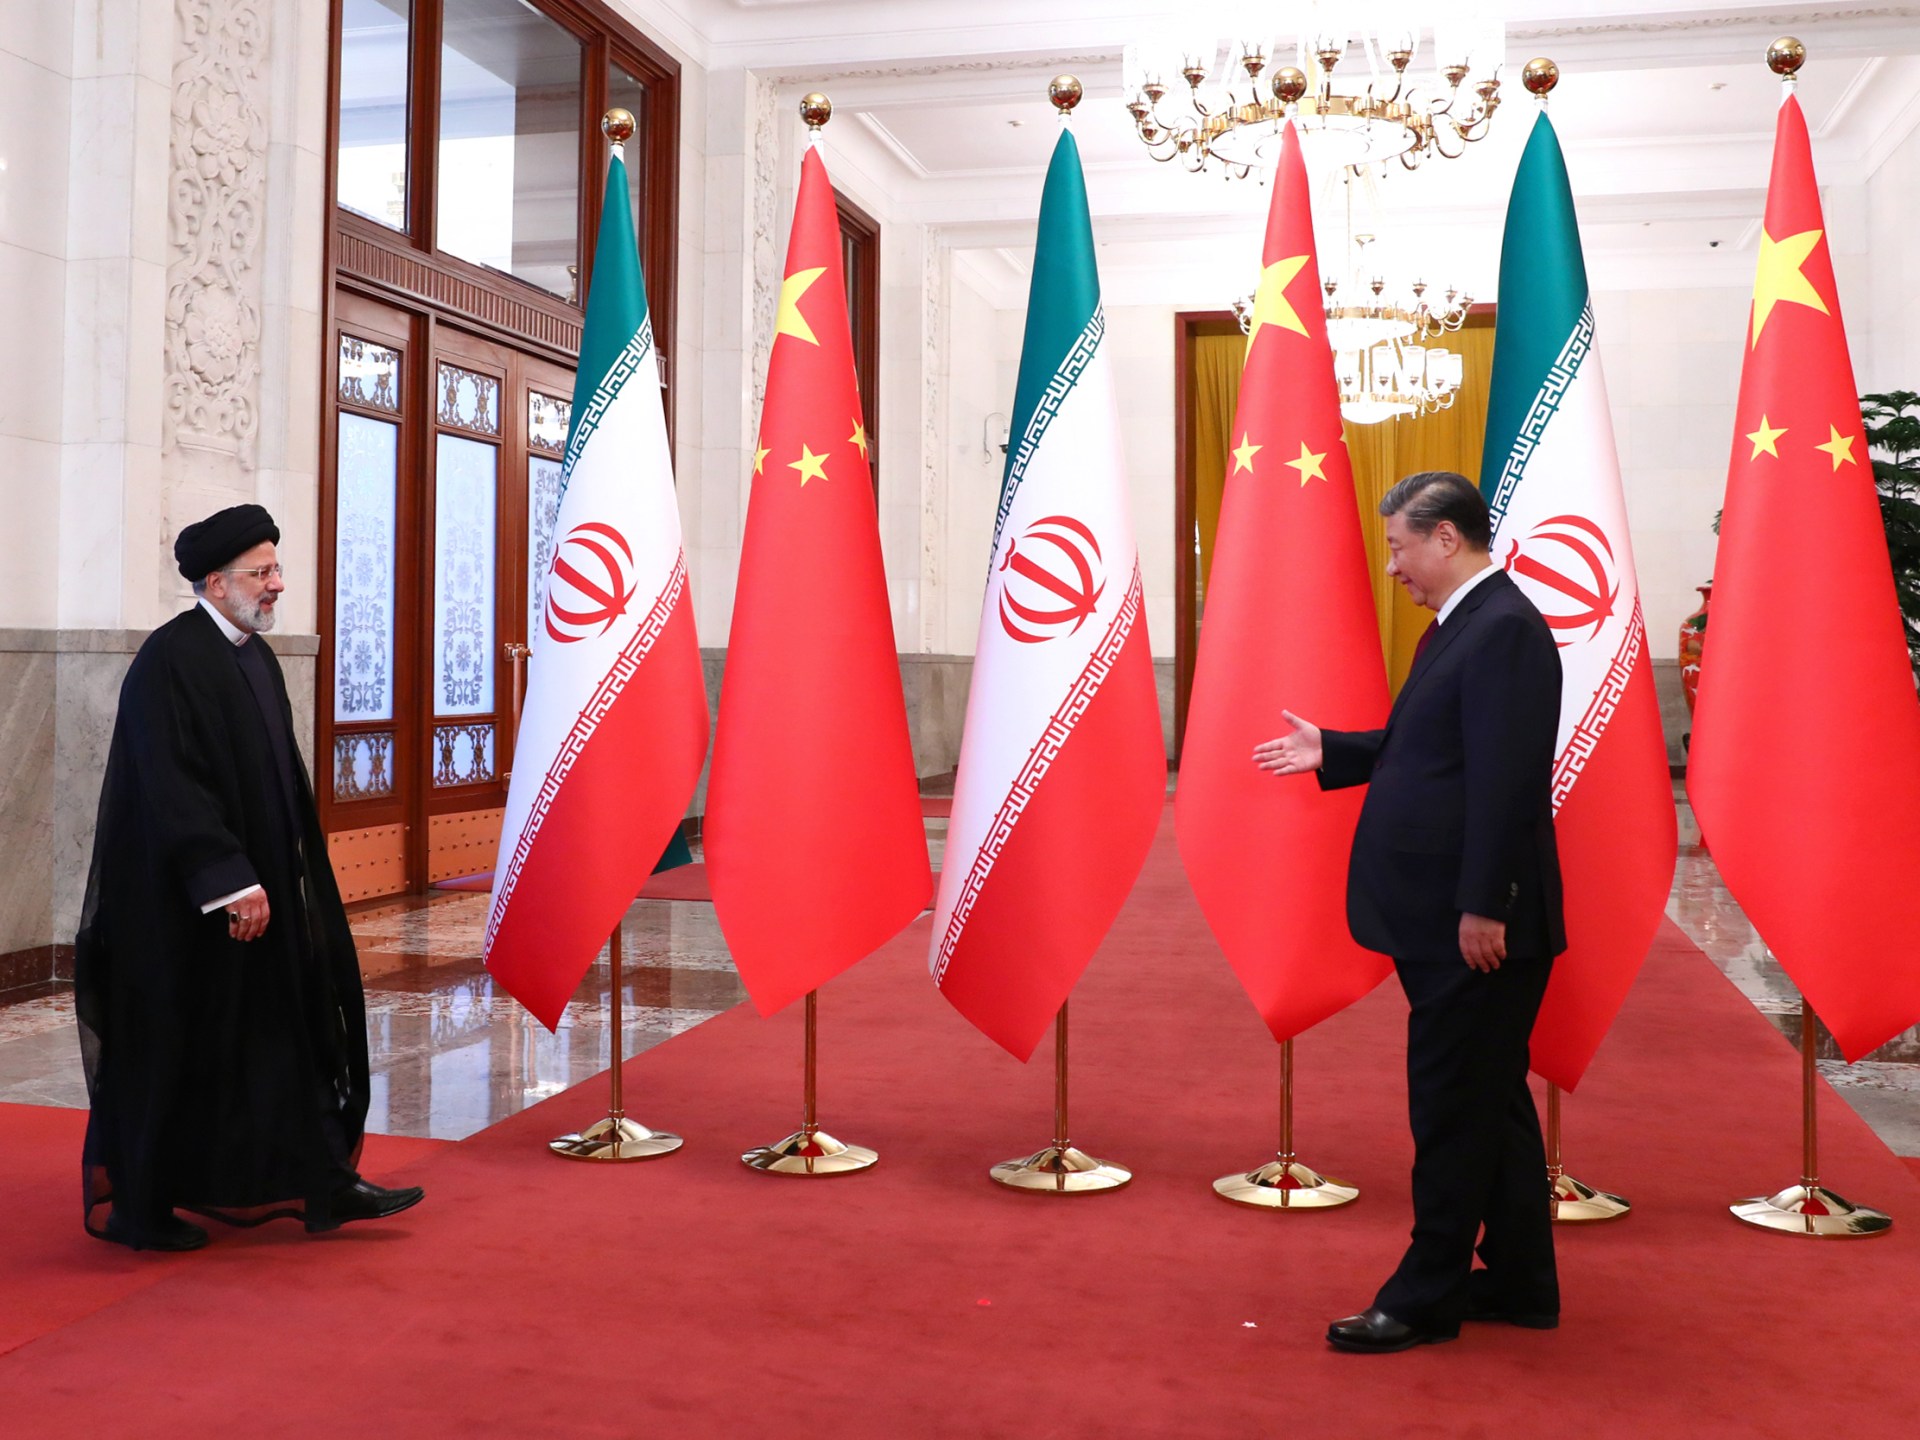 Bagaimana kunjungan Raisi ke Beijing akan mempengaruhi hubungan Iran-China?  |  Berita Xi Jinping